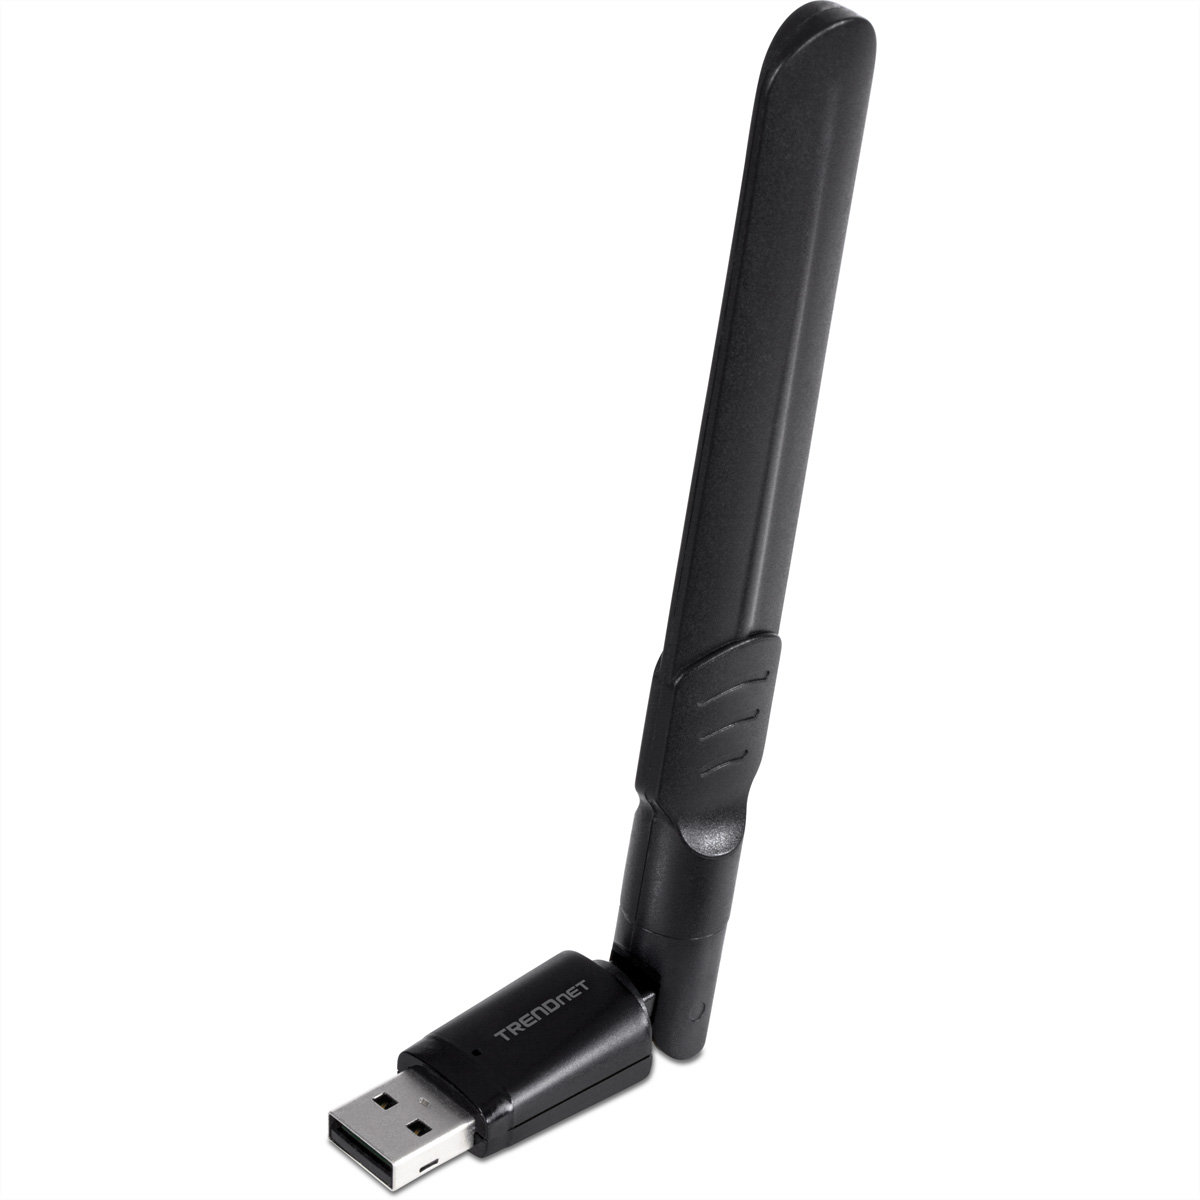 TRENDnet TEW-805UBH Wireless USB Adapter AC1200 Dual Band